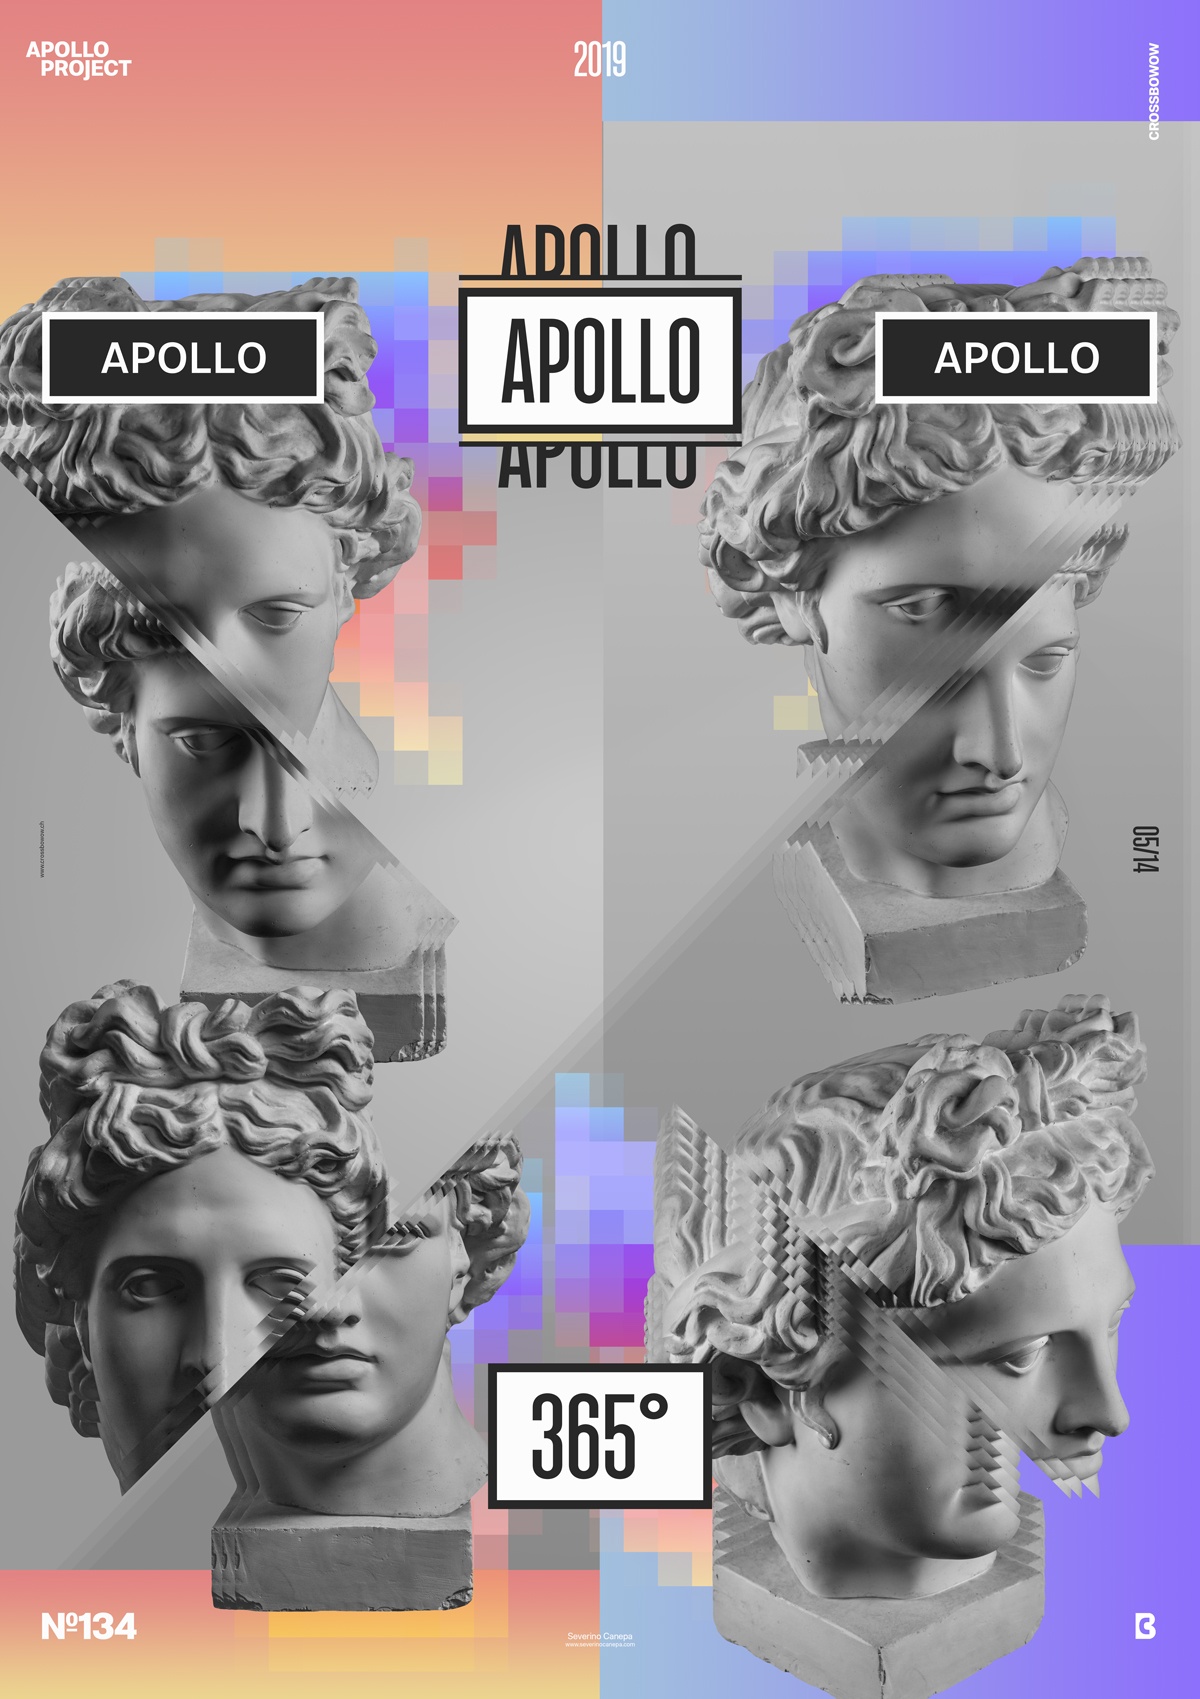 Original digital art poster design made with for Apollo's Statue